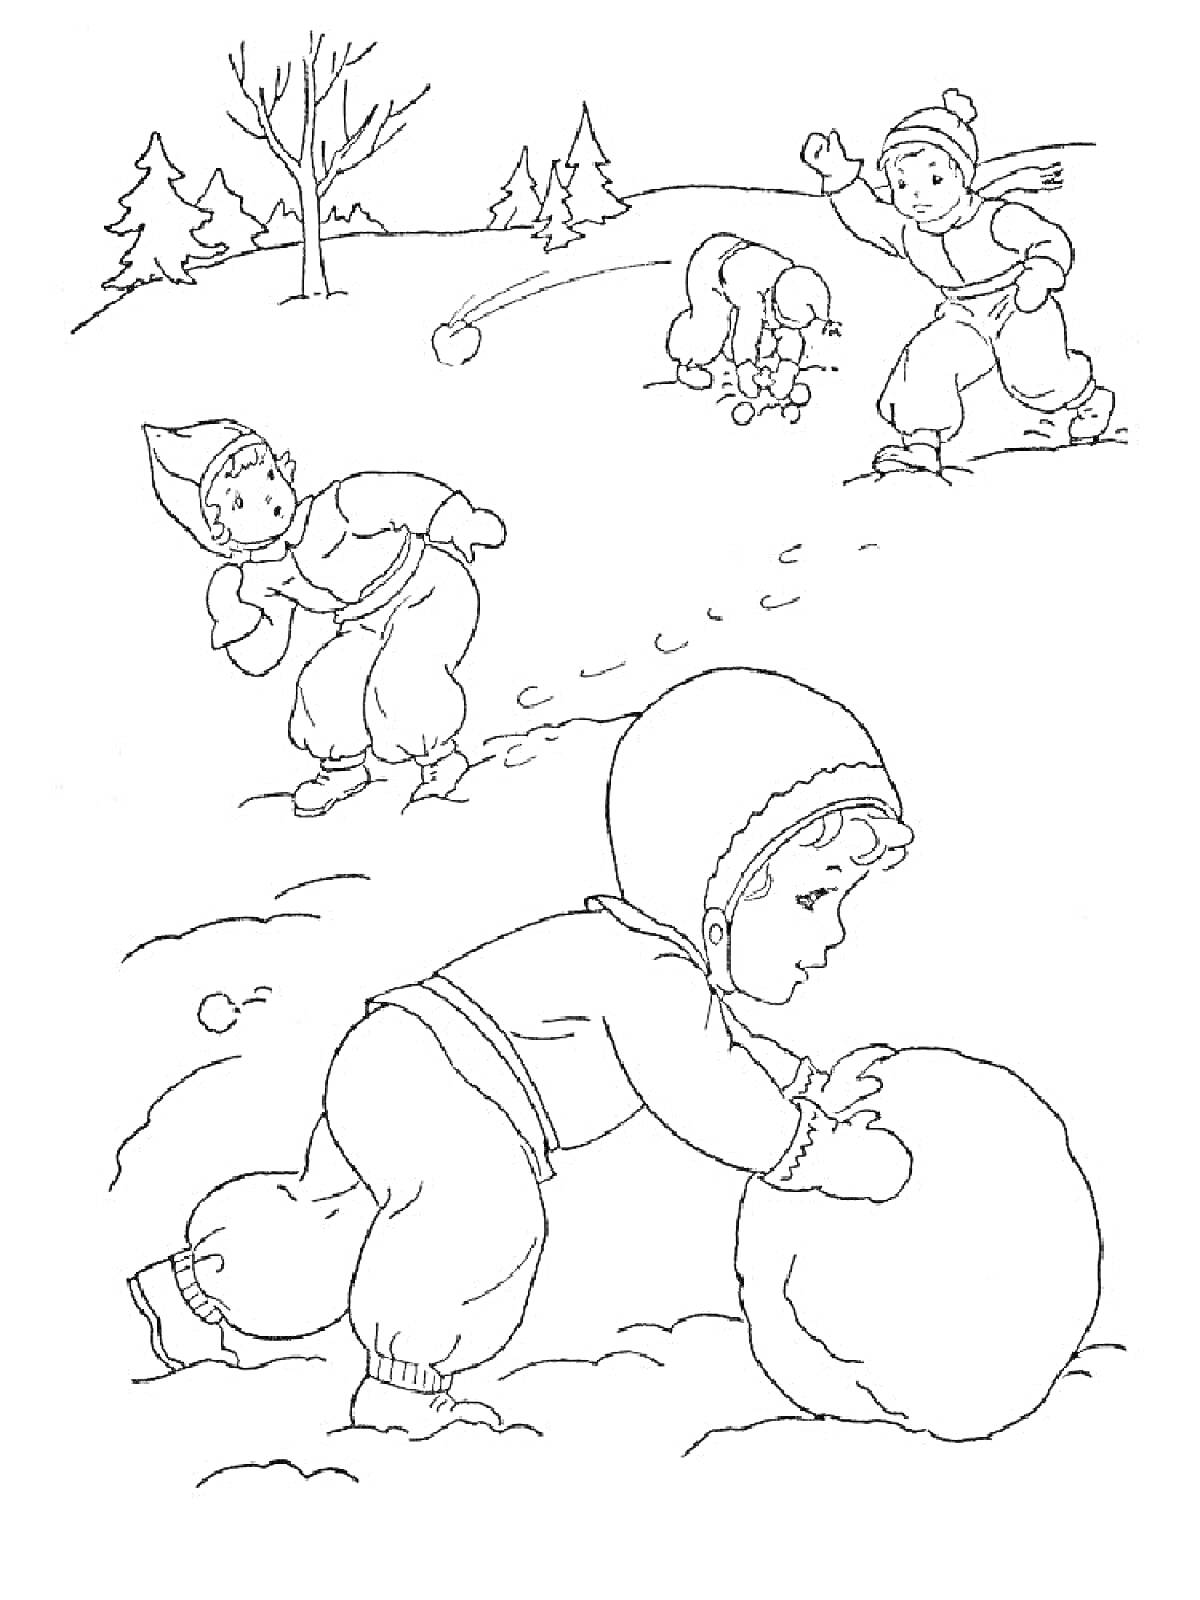 На раскраске изображено: Зимние забавы, Лепка снеговика, Игра в снежки, Ёлки, Снег, Зимняя одежда